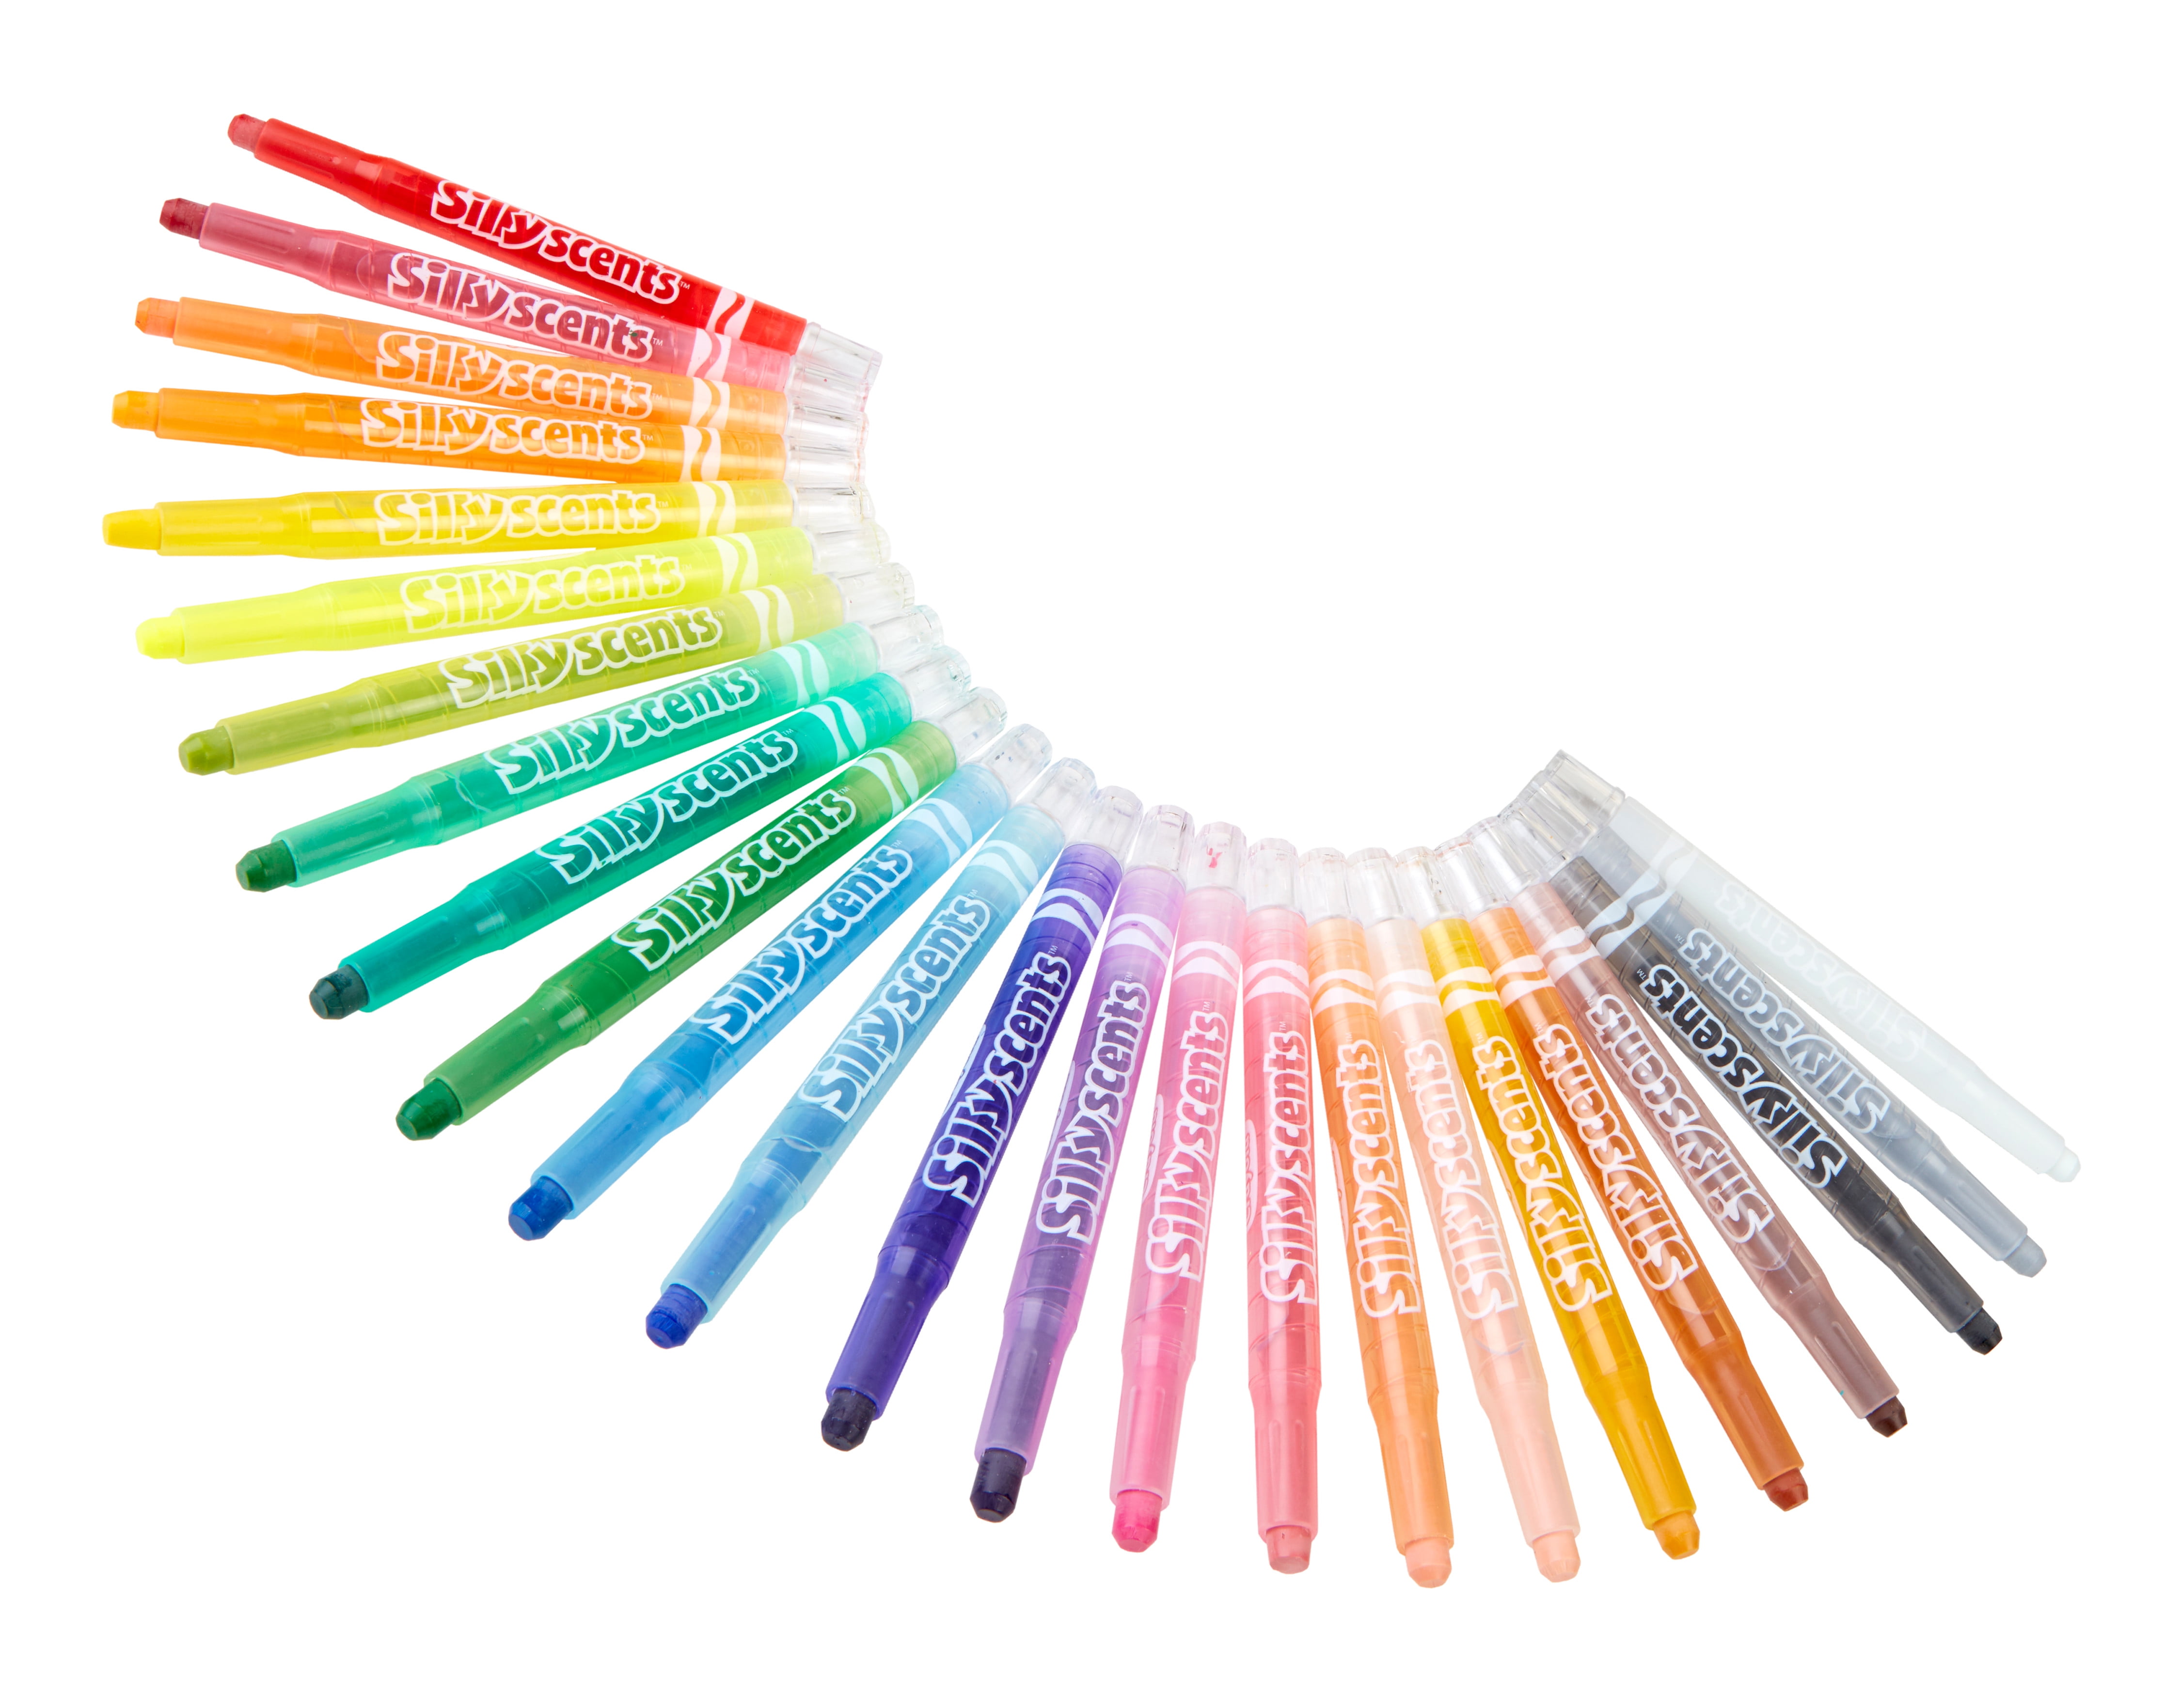 Crayola Crayons Scented Smashups, Mini Twists, School Supplies, 24 Count,  Assorted Colors 